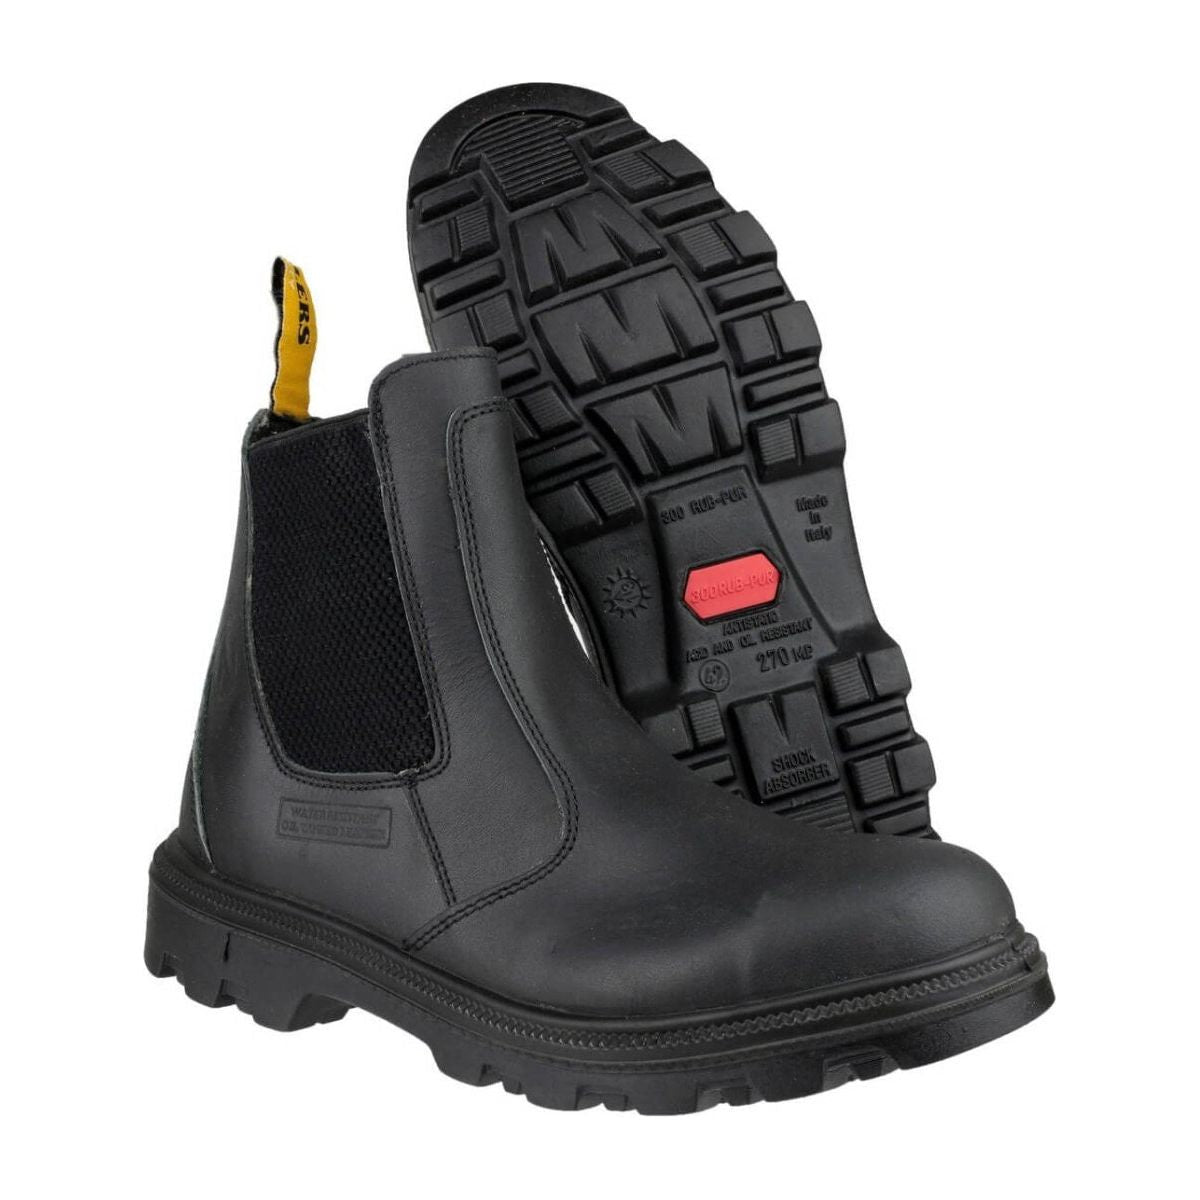 Amblers Fs129 Safety Dealer Boots Mens - workweargurus.com